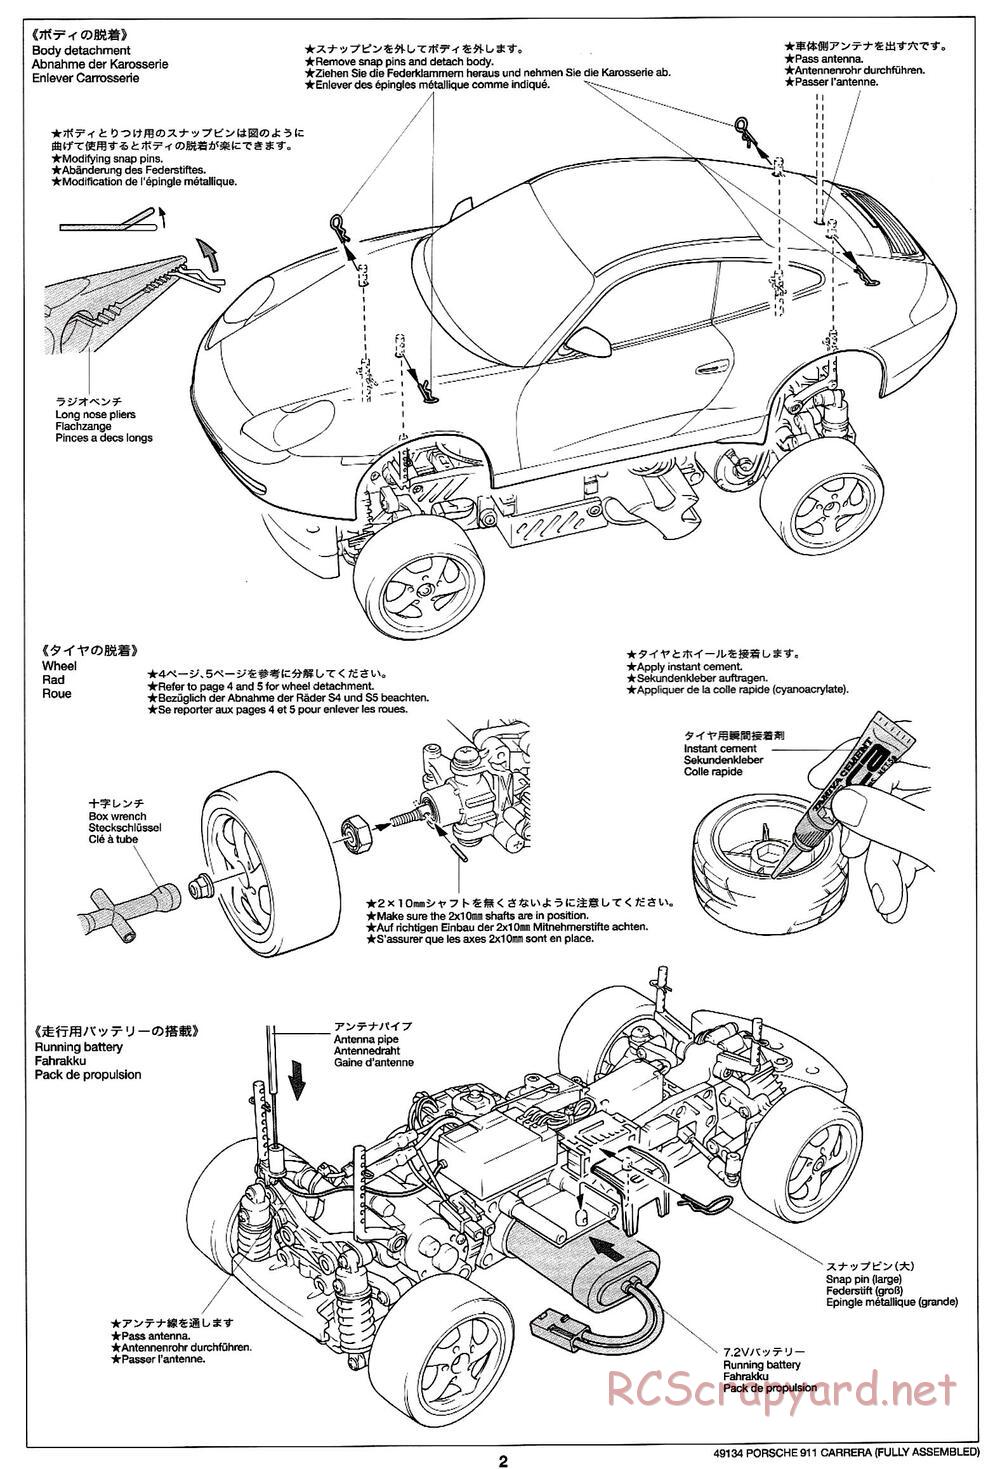 Tamiya - Porsche 911 Carrera - M-04L - Manual - Page 2